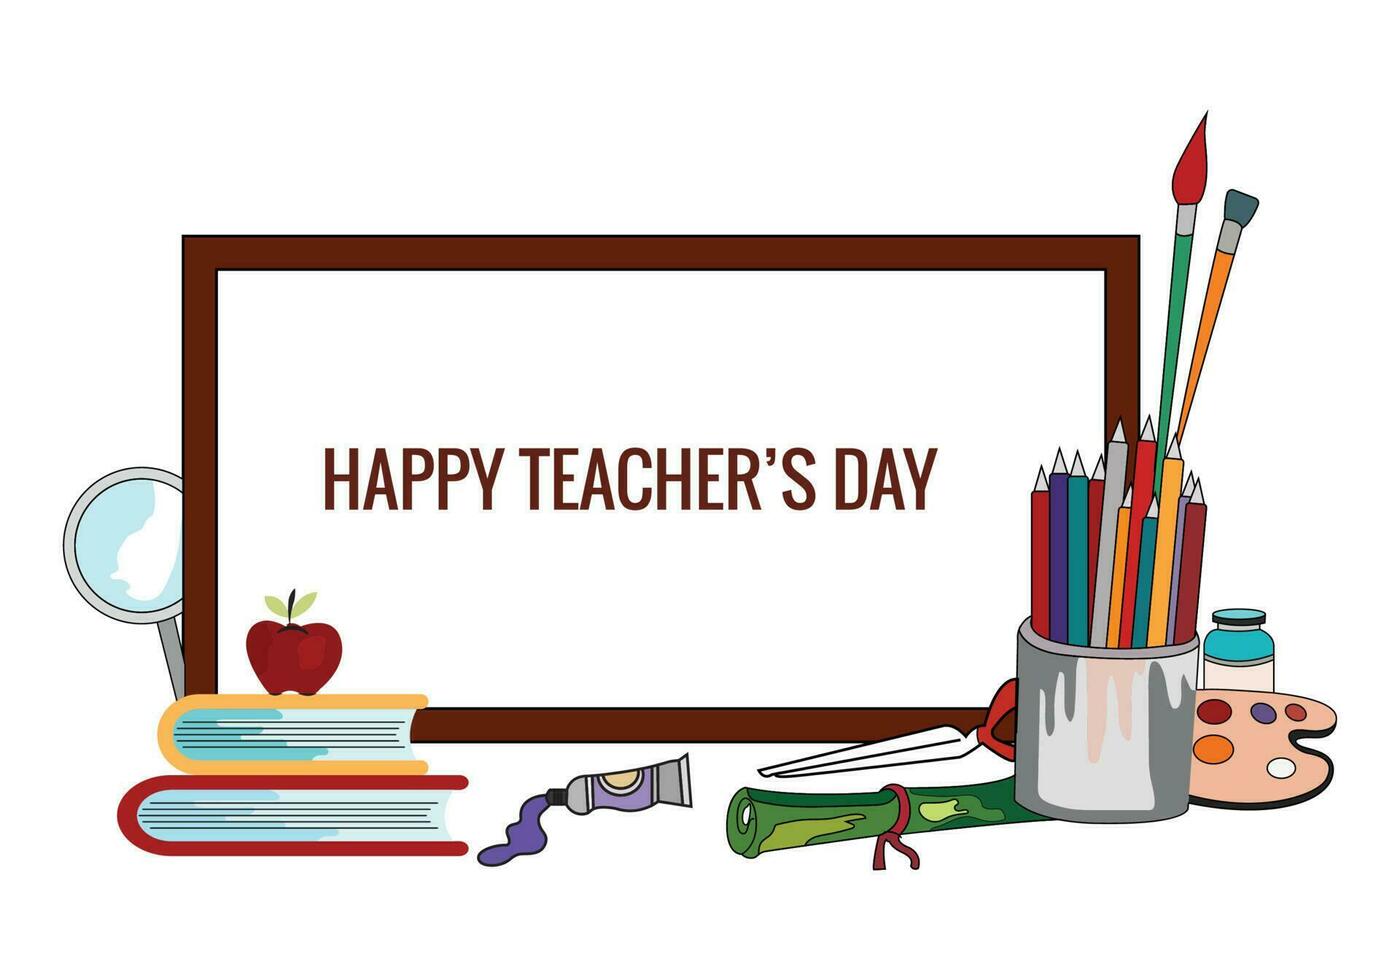 Happy teachers' day celebration card background vector